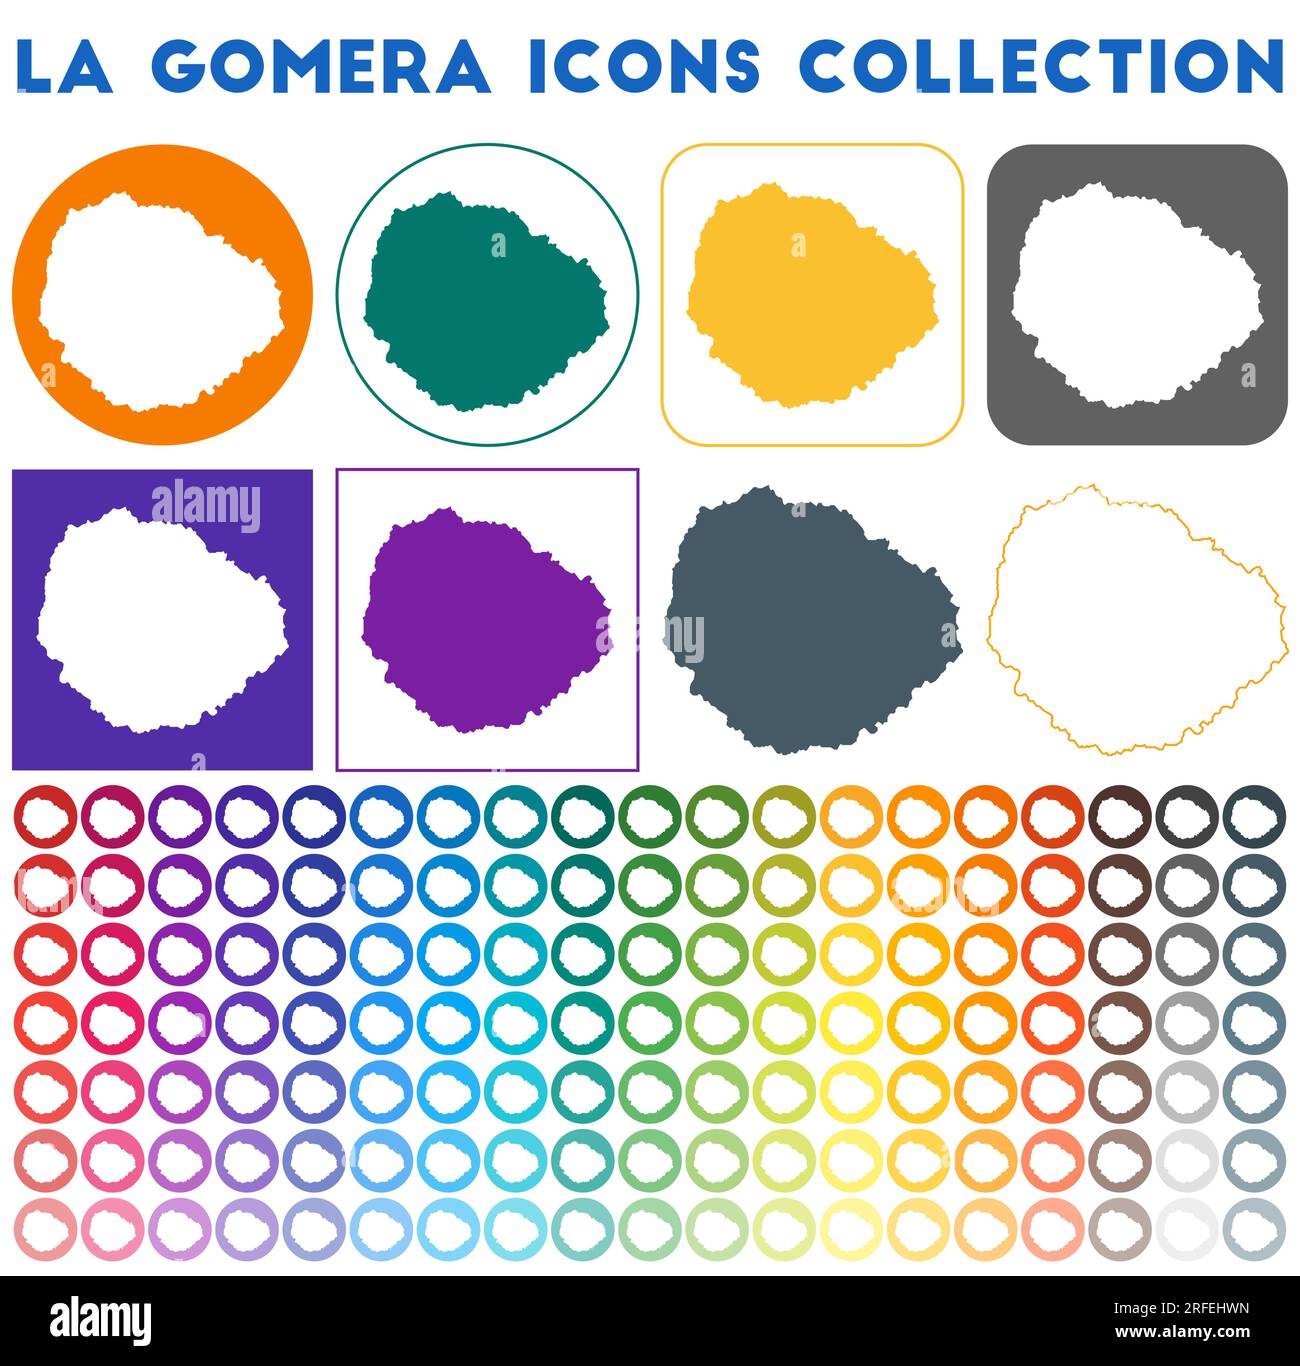 La Gomera Icons Kollektion. Bunte, trendige Kartensymbole. Modernes La Gomera-Abzeichen mit Inselkarte. Vektordarstellung. Stock Vektor